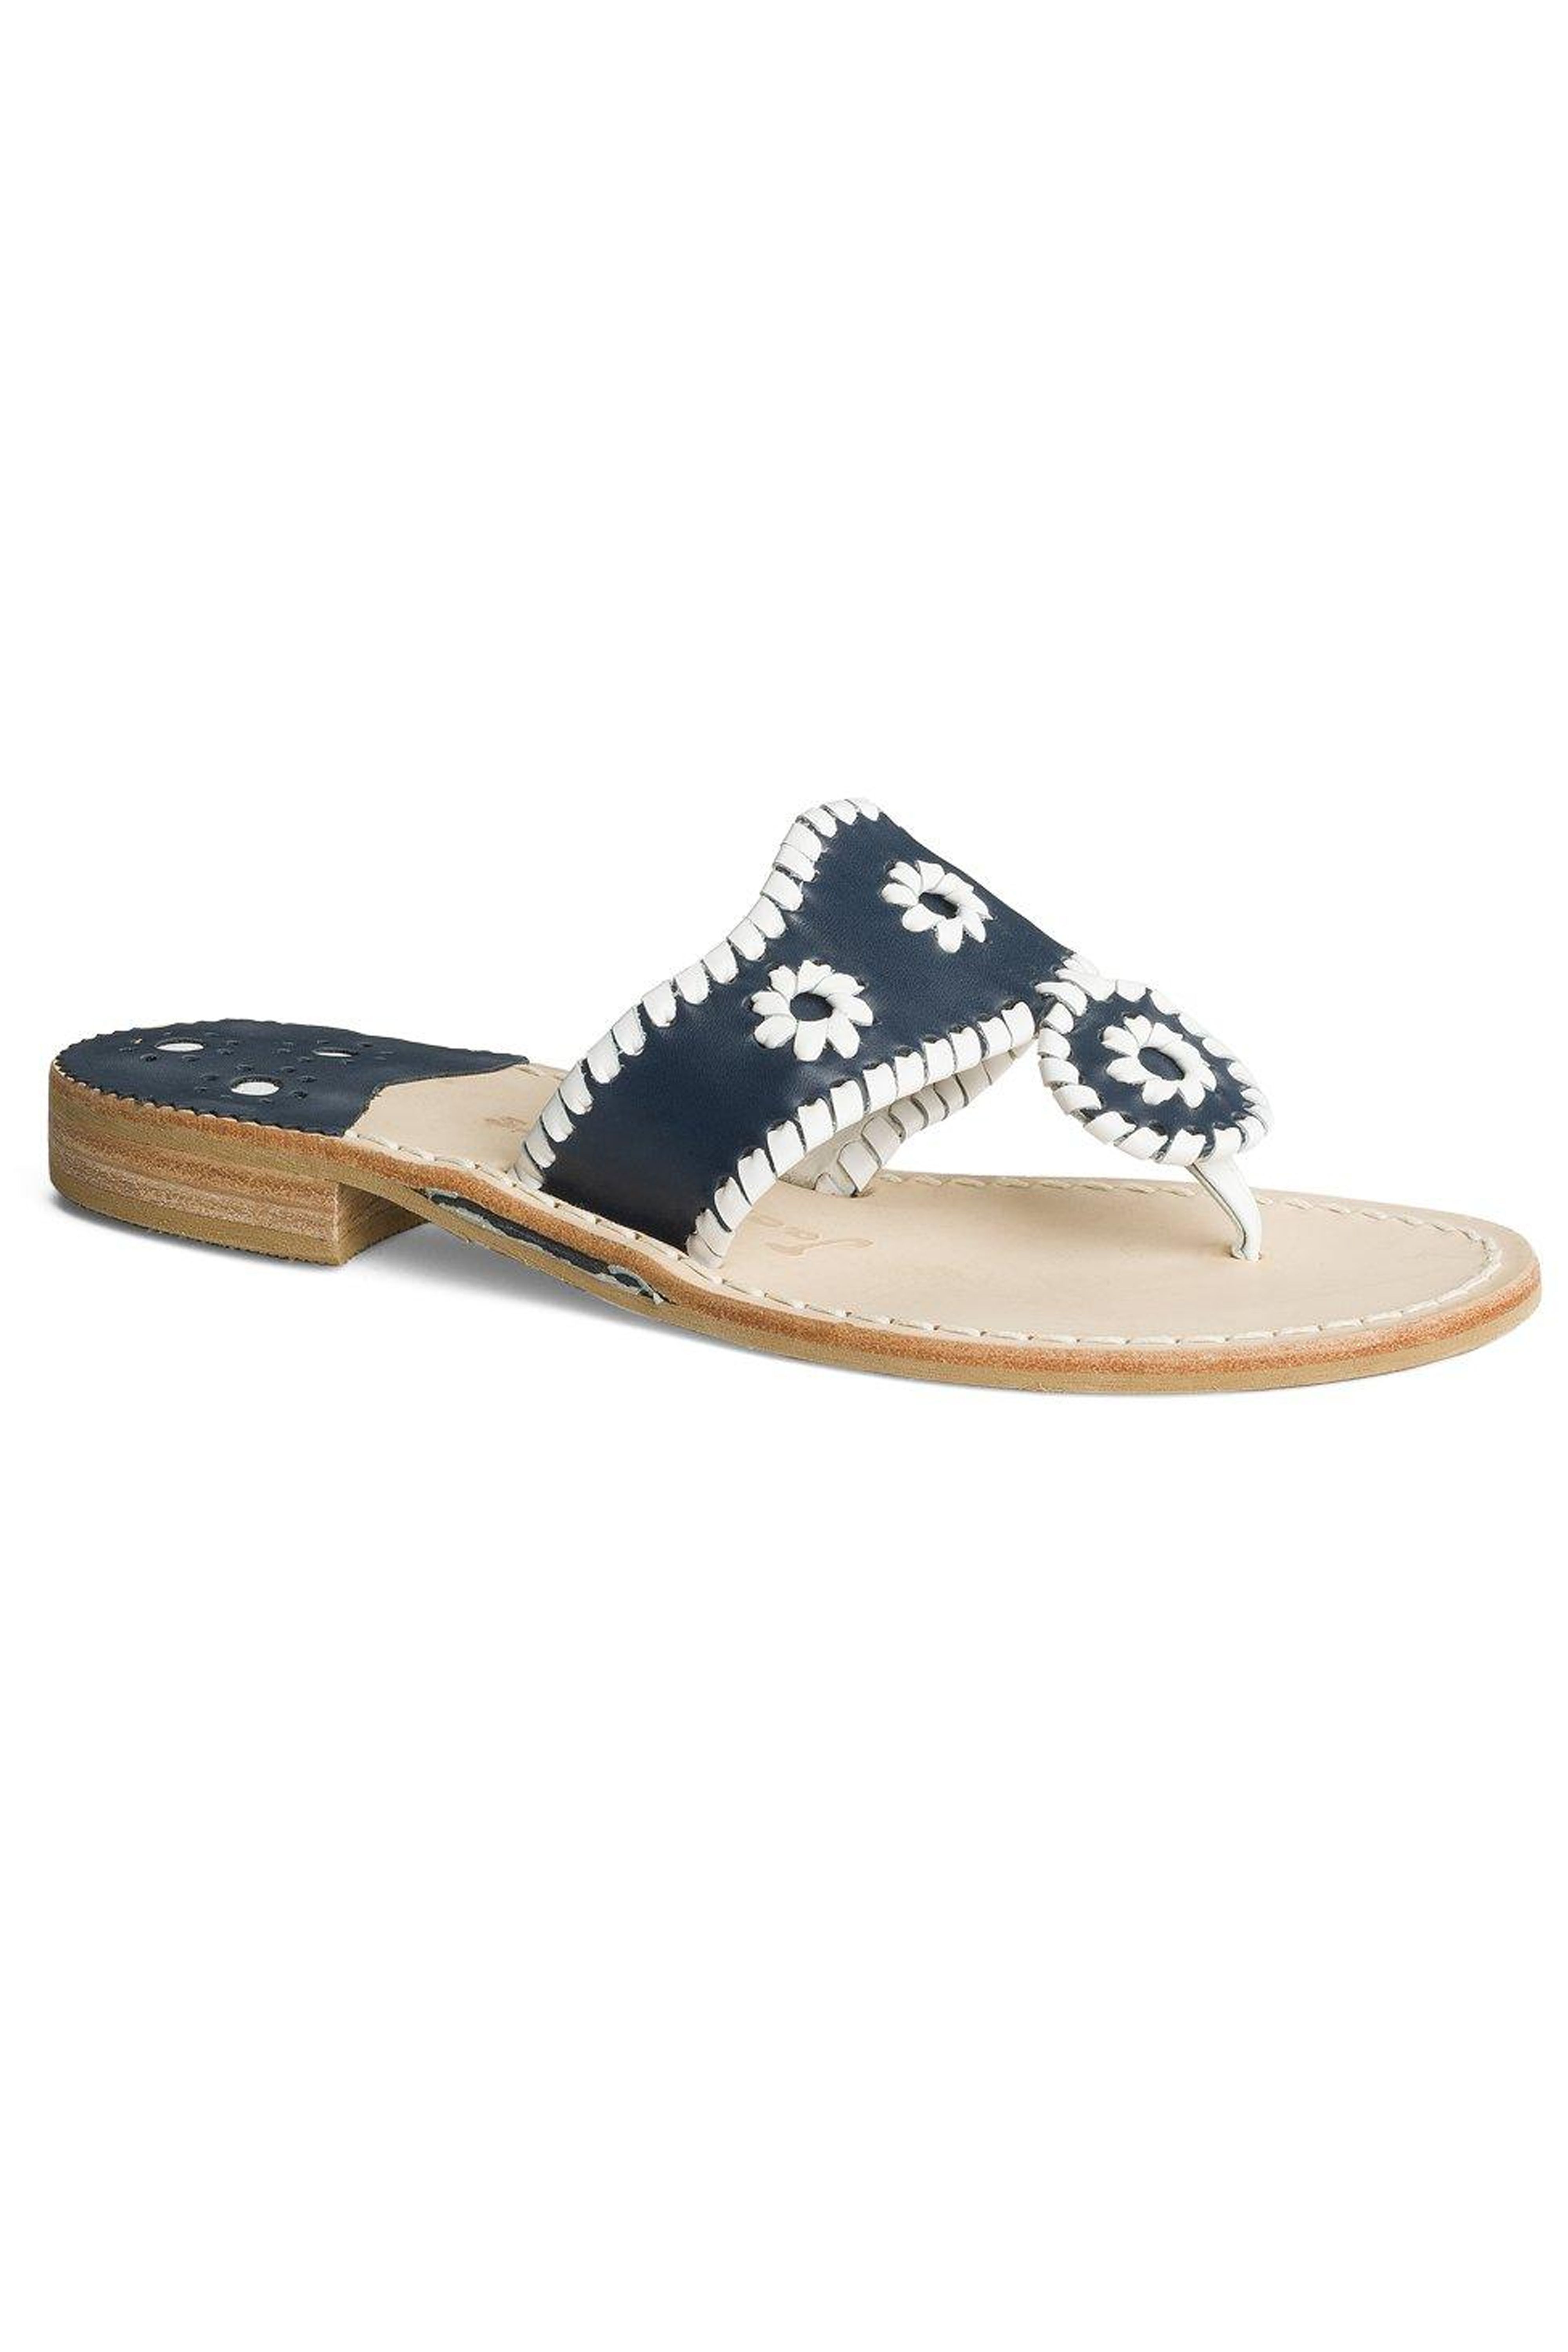 jack rogers wide palm beach sandal